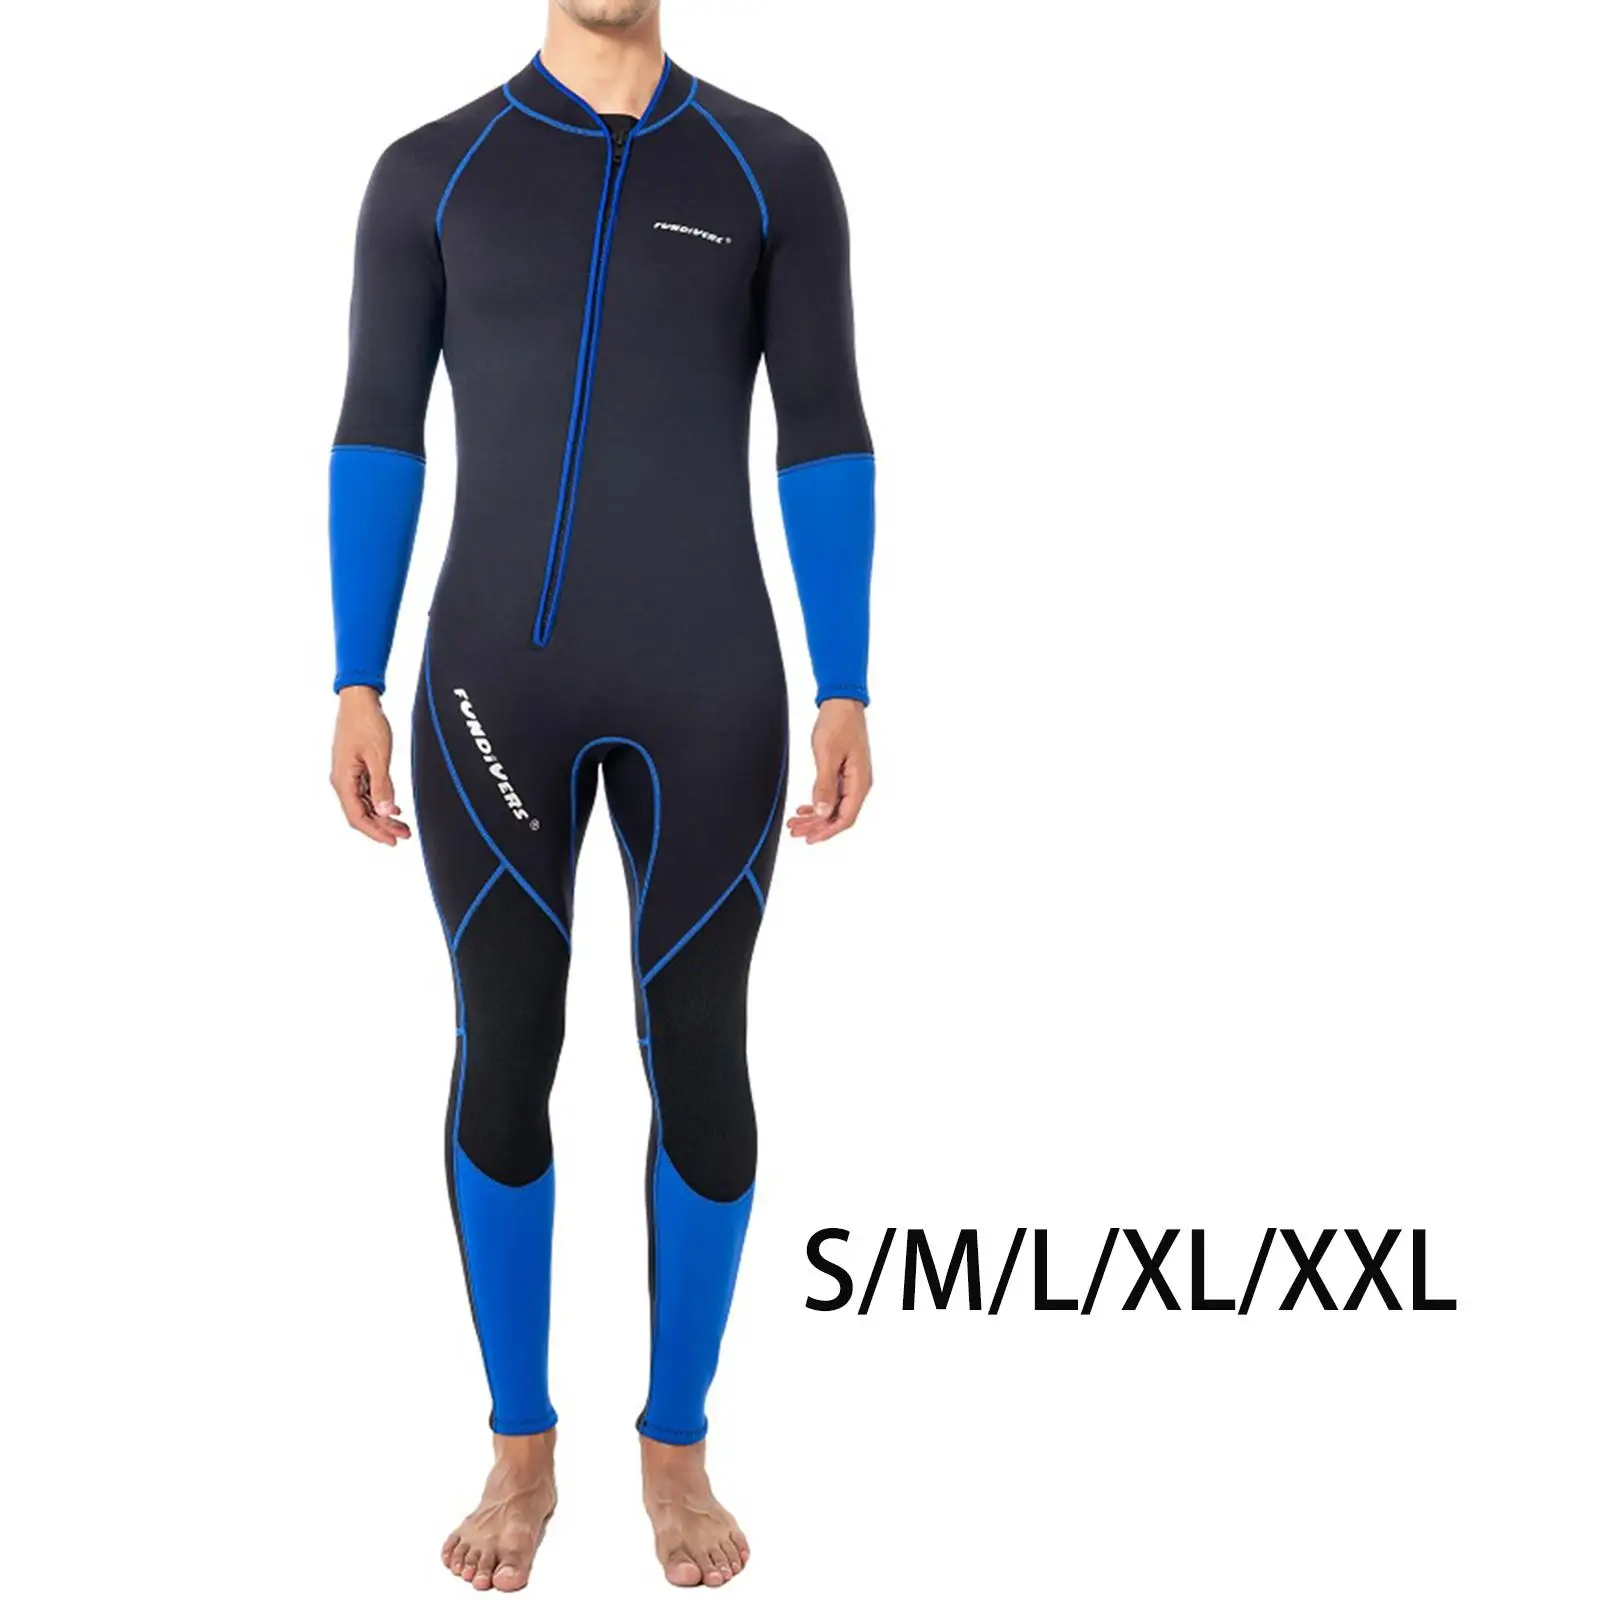 Neoprene Wetsuit Split Long Sleeved Underwater Scuba Diving Suit Swimsuit Fullsuit for Surfing Snorkeling Canoe Kayaking Adults